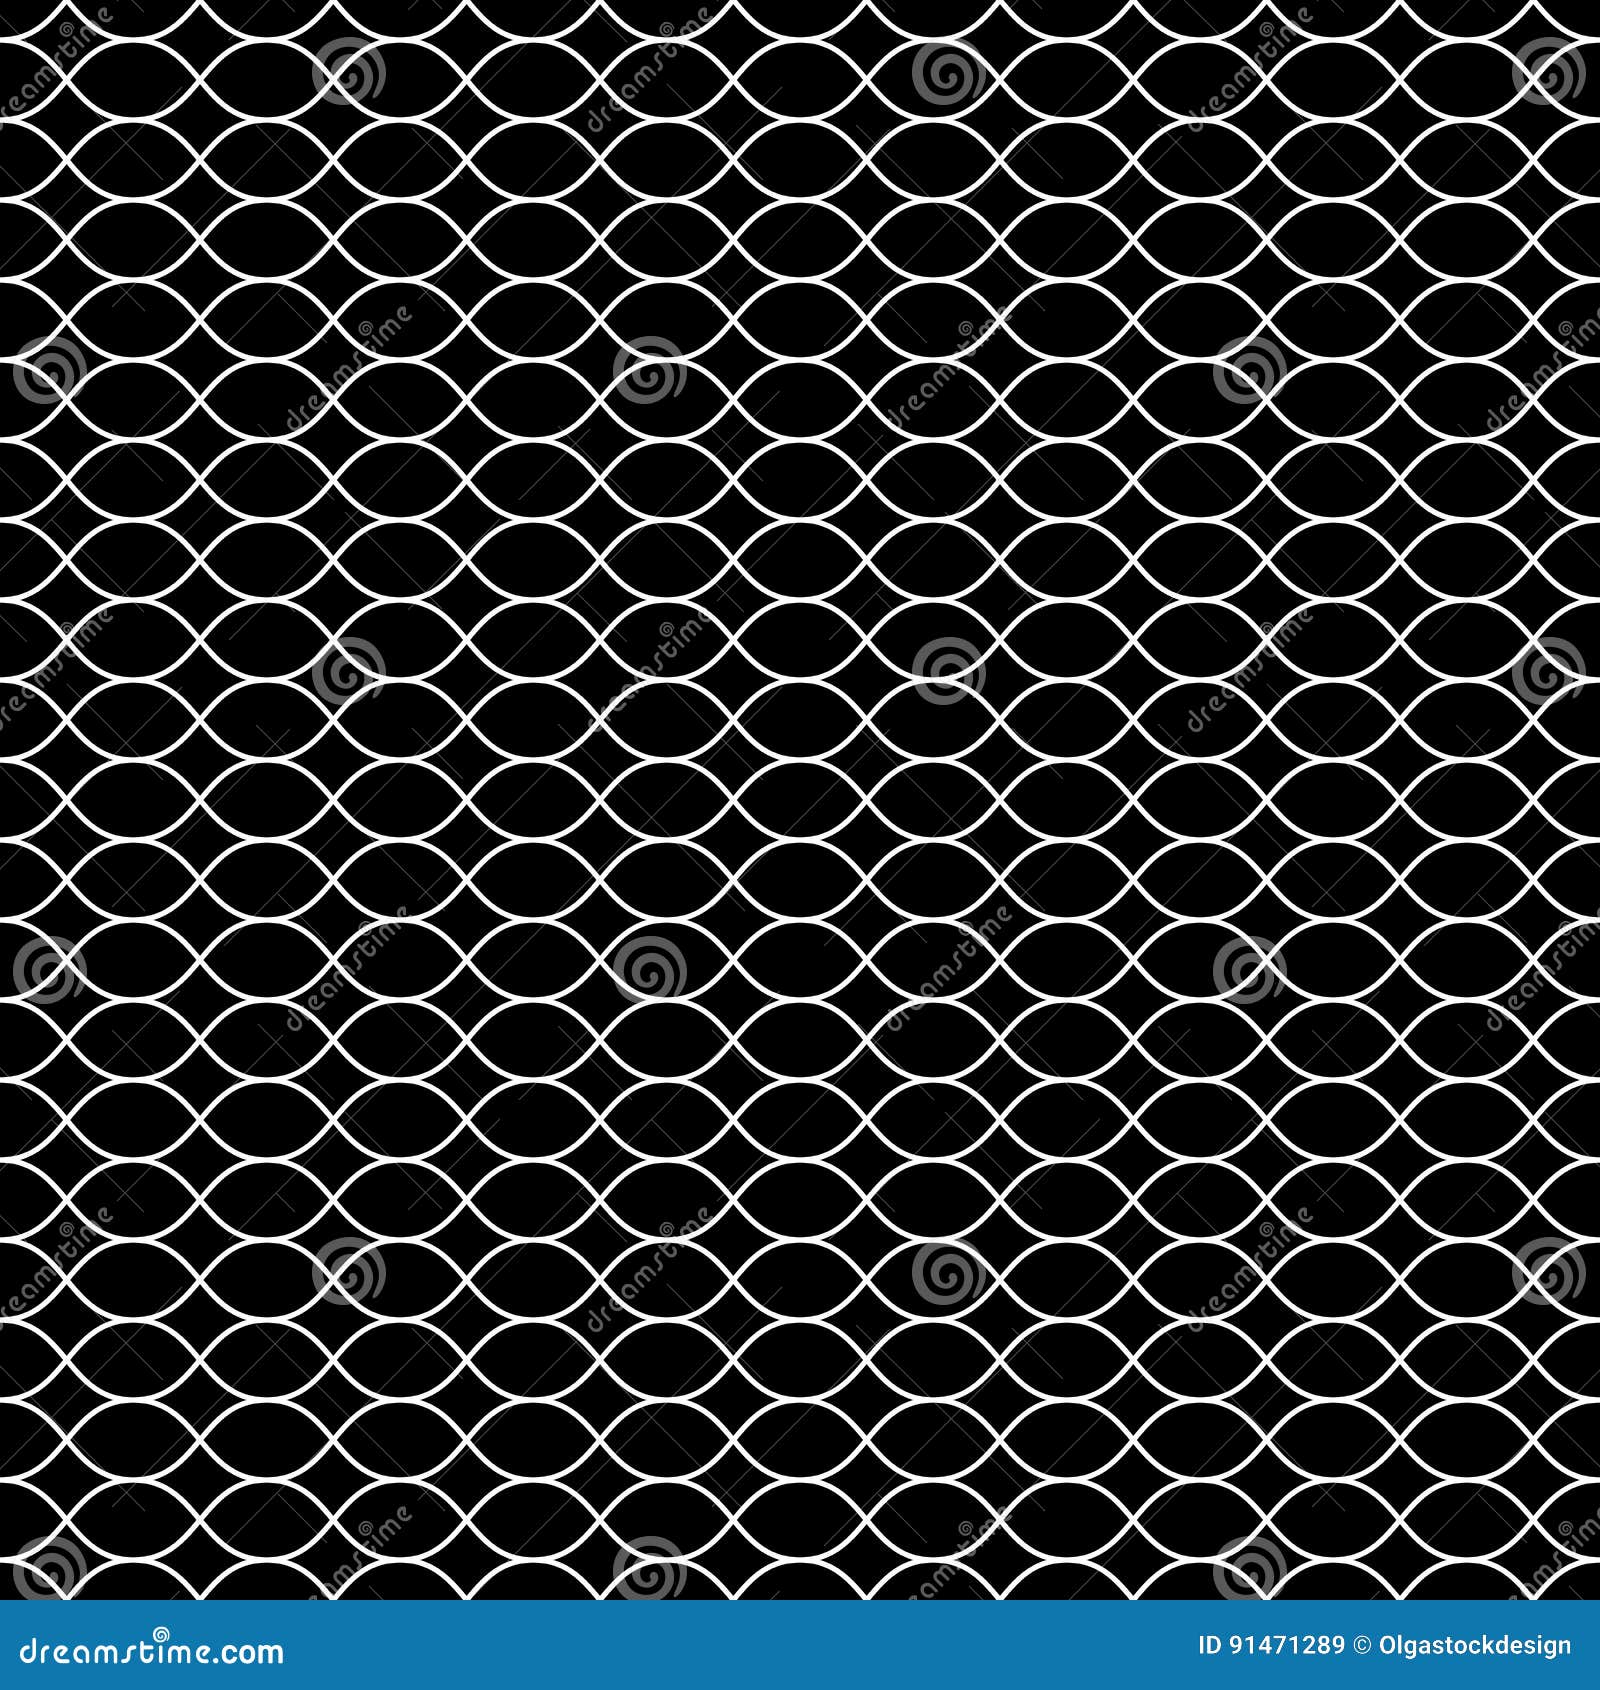 Fishnet Texture Stock Illustrations – 1,652 Fishnet Texture Stock